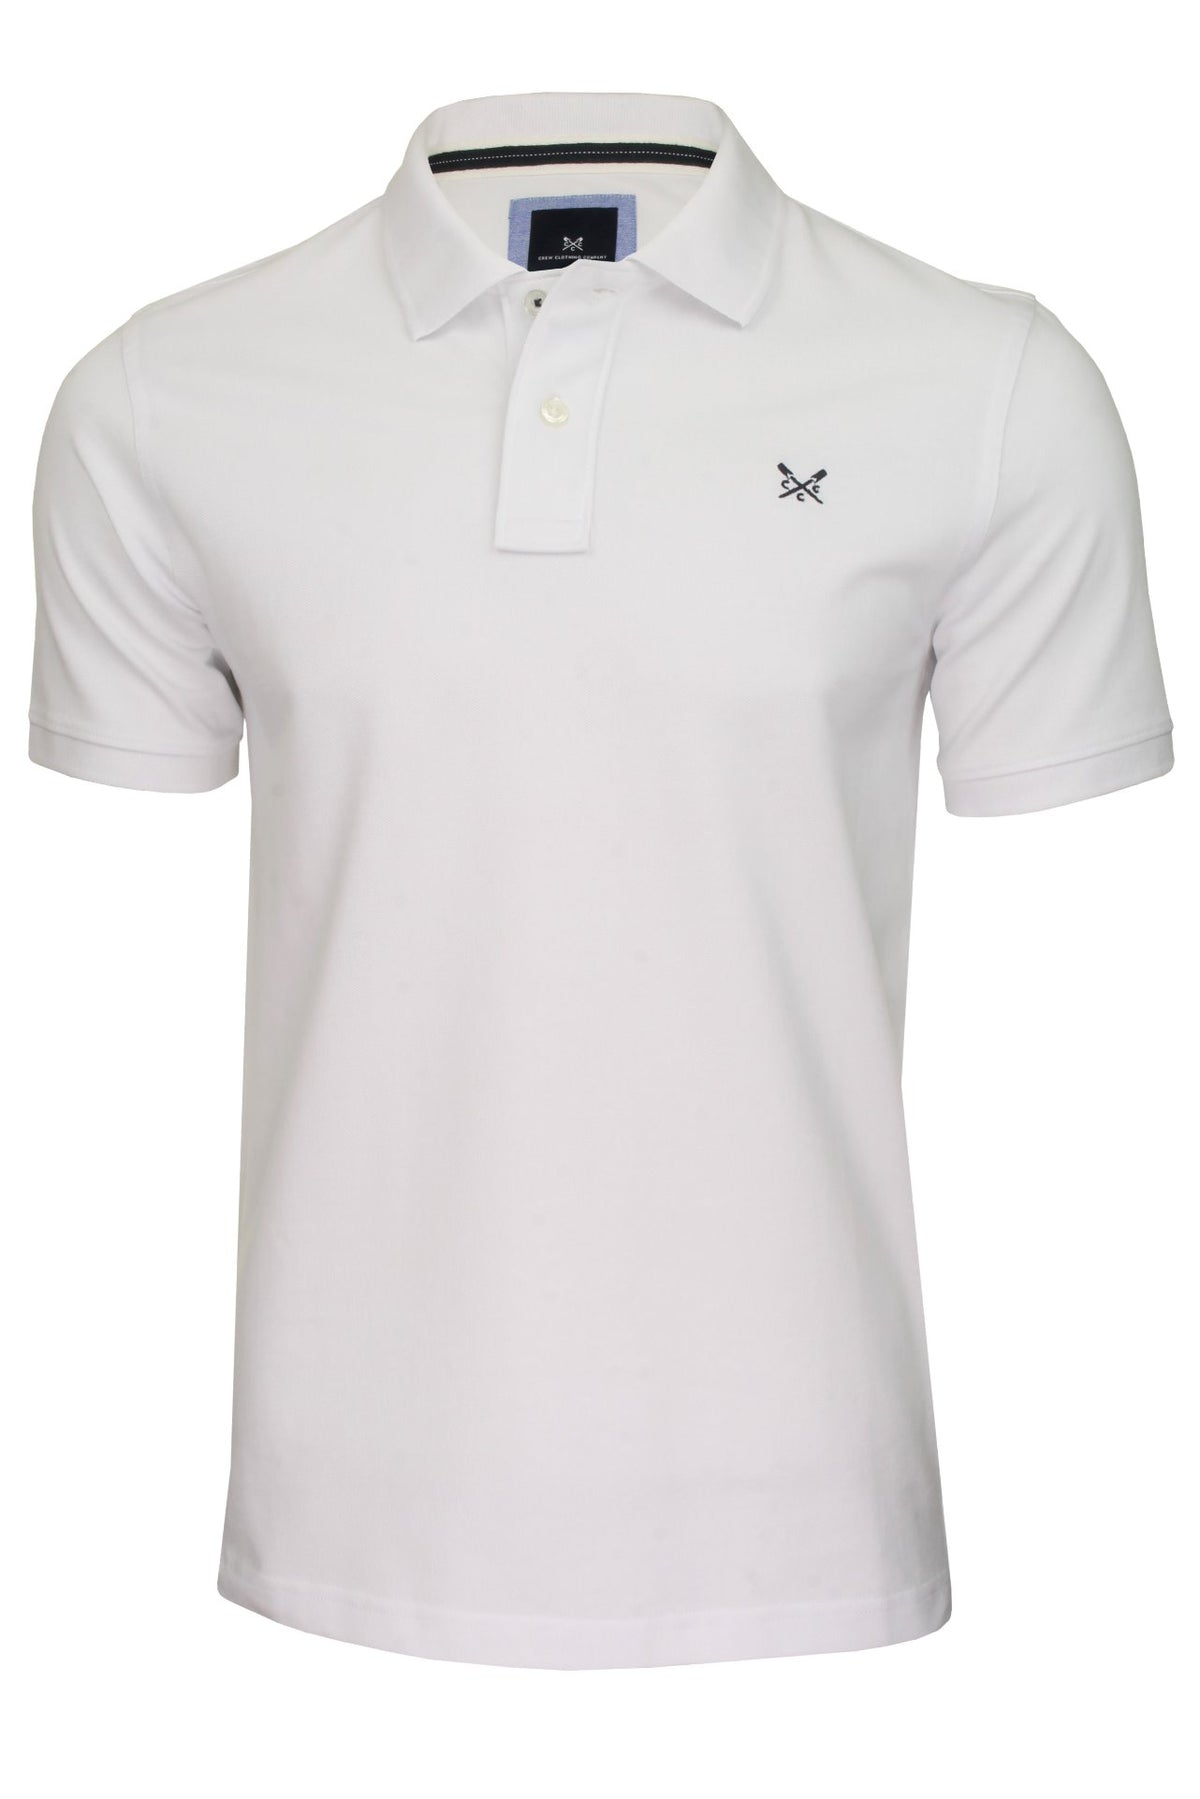 Crew Clothing Mens Pique Polo Shirt 'Classic Pique Polo' - Short Sleeved, 01, Mke002, Optic White